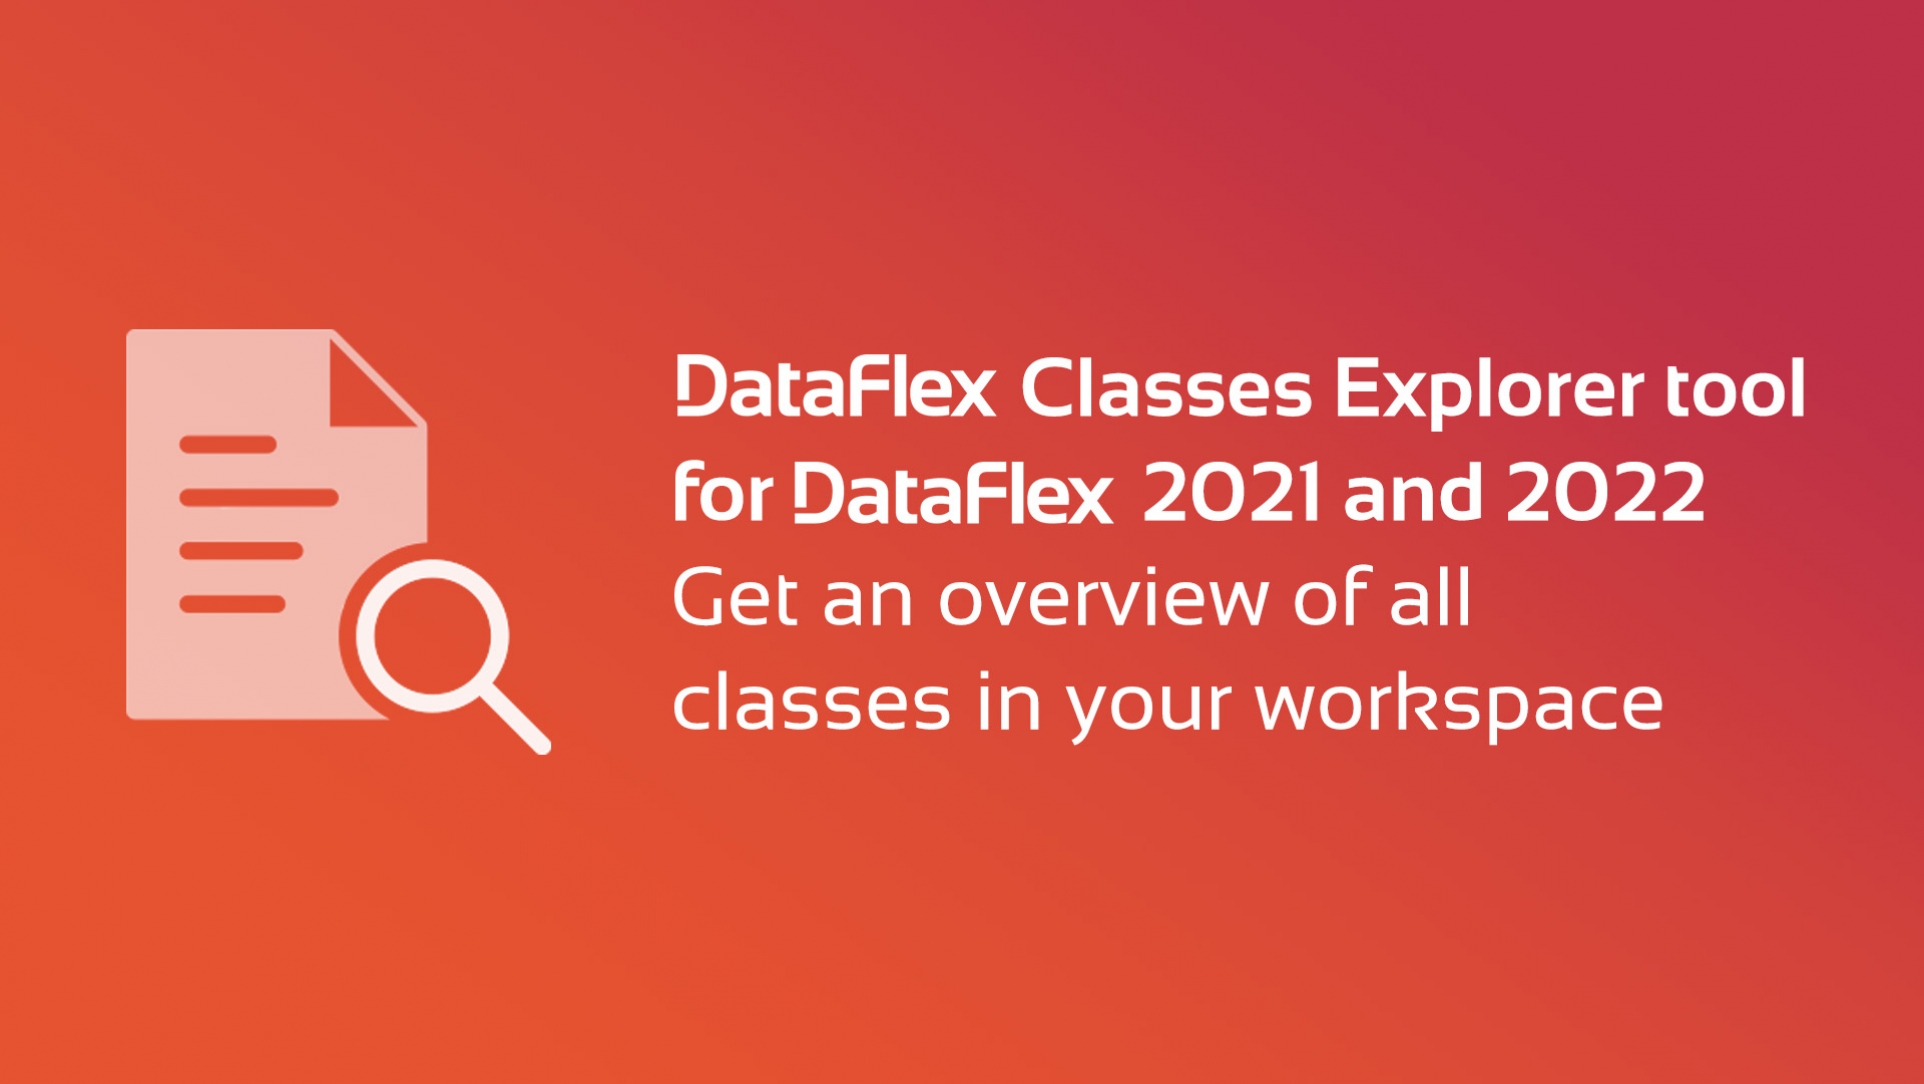 DataFlex Classes Explorer available for DataFlex 2021 and 2022